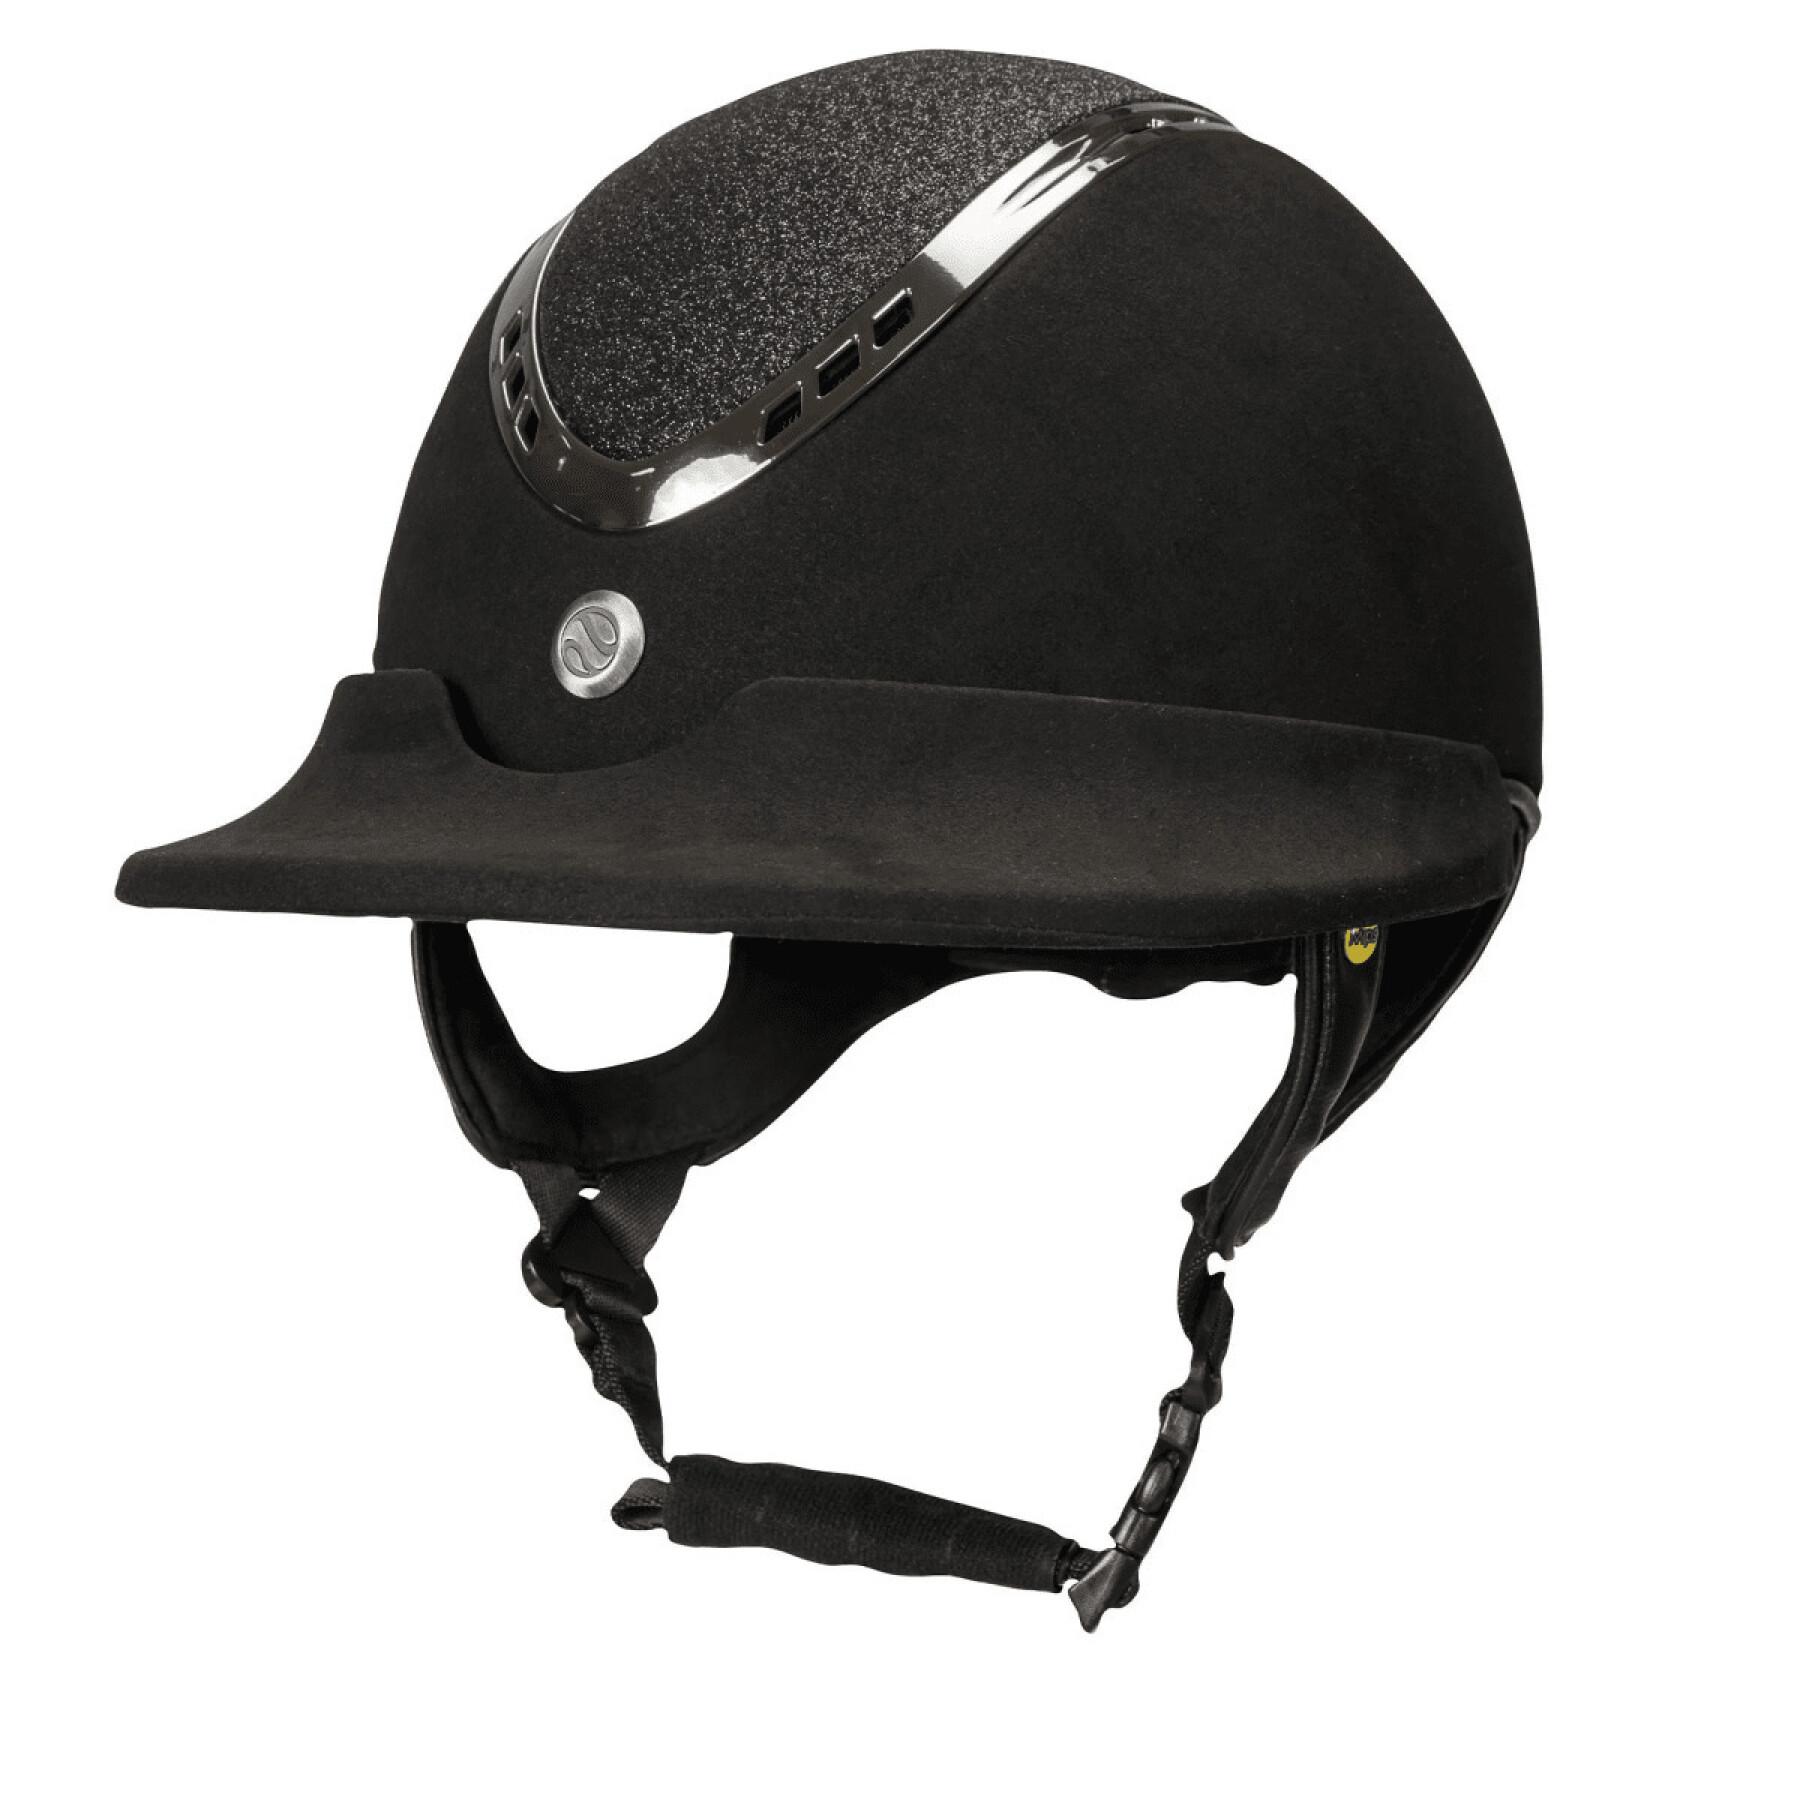 Visera de microfibra para casco de equitación Back on Track Pardus